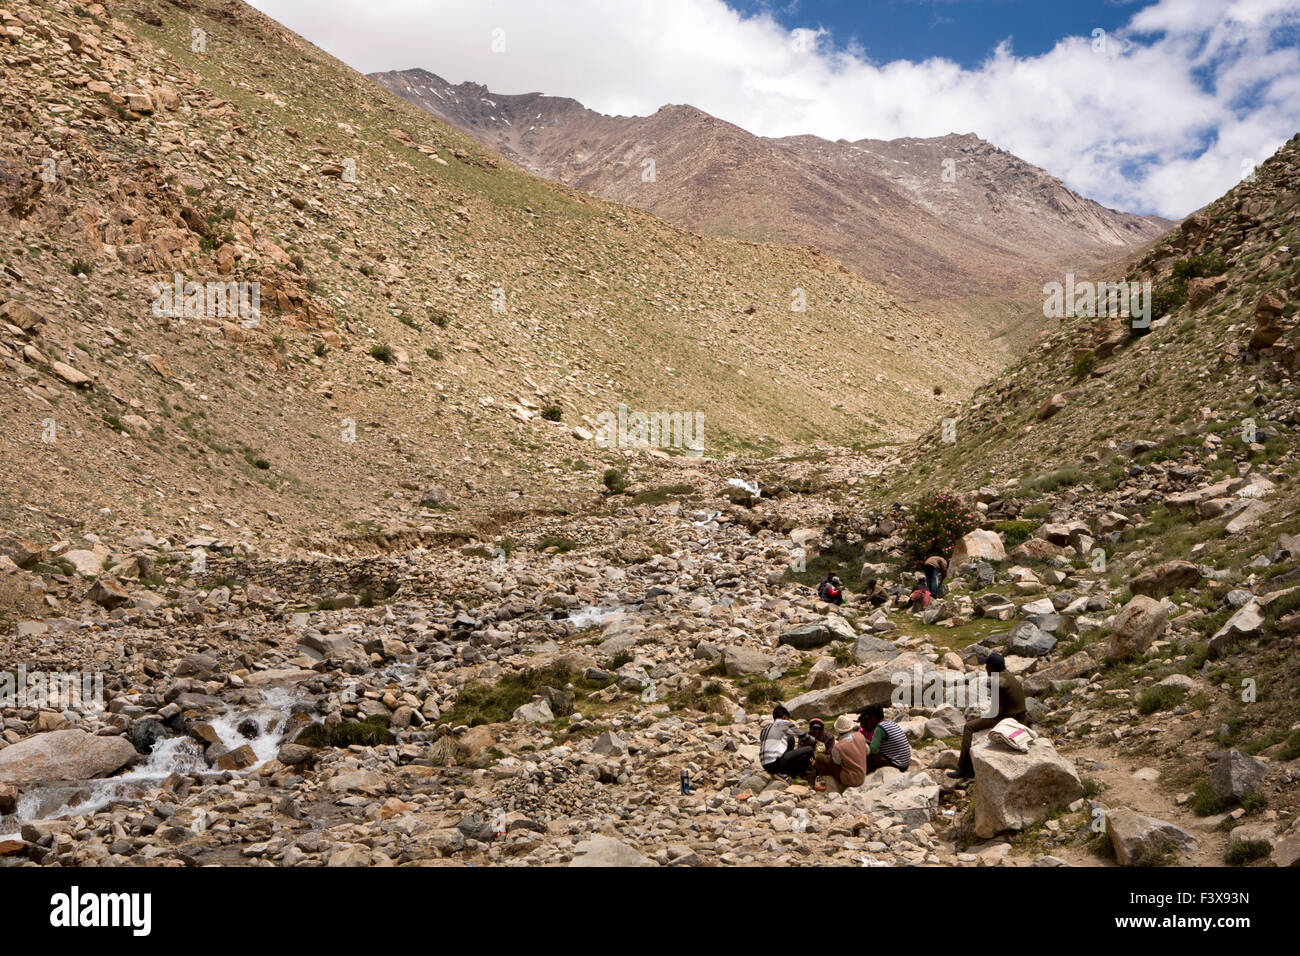 India, Jammu & Kashmir, Ladakh, Leh, Bihari migrant road workers resting in high altitude rocky river valley Stock Photo